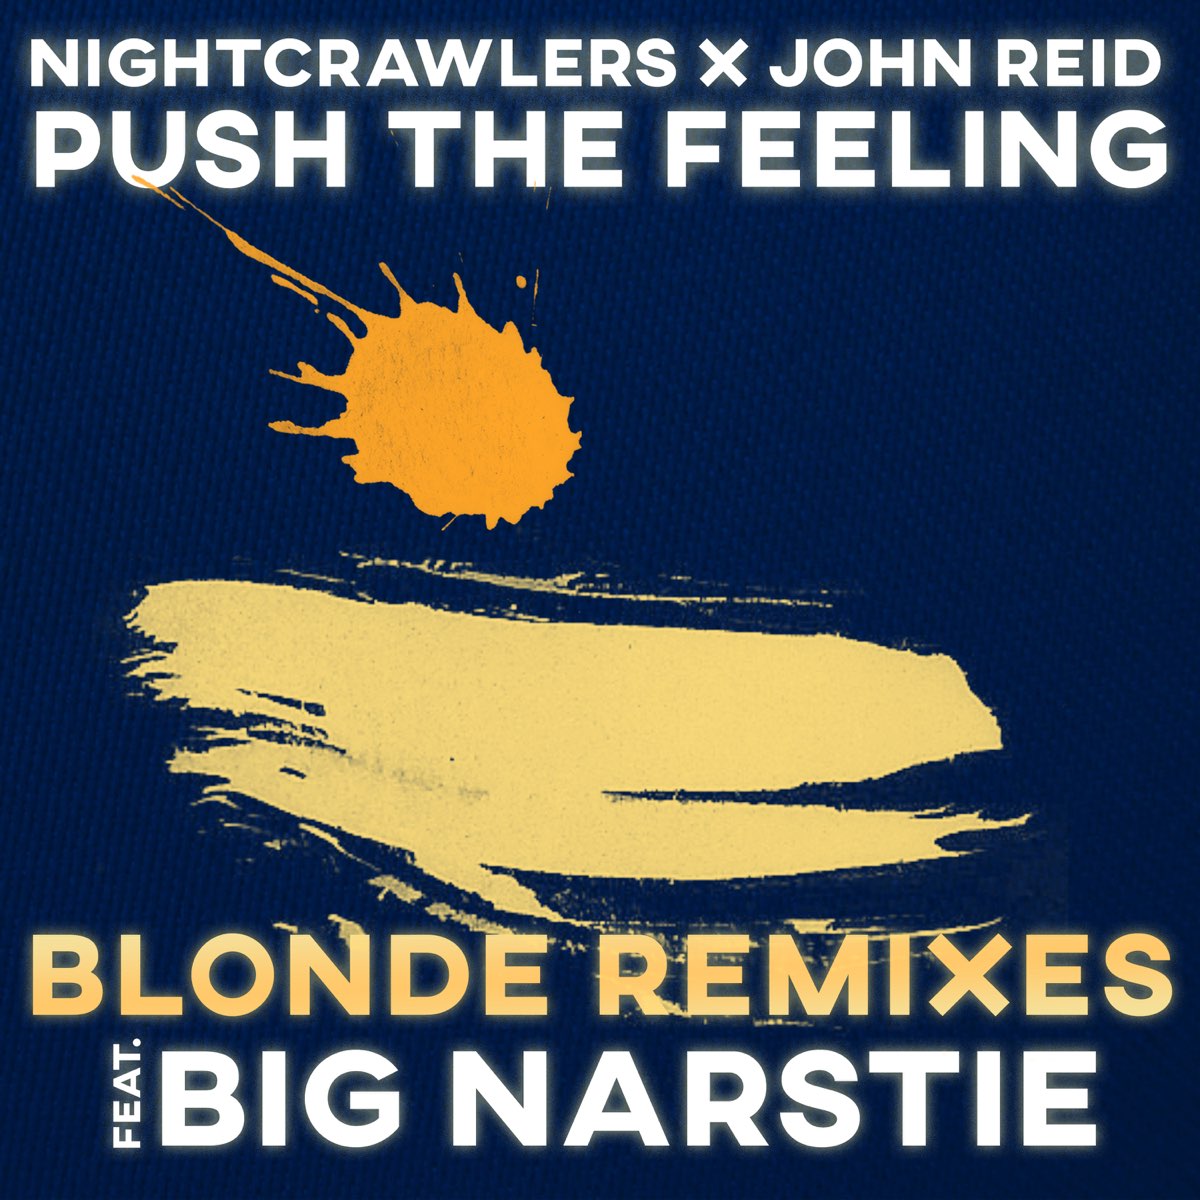 John Reid Nightcrawlers. John Reid (Music Manager). Nightcrawlers Push the feeling on Perfectov Remix. Greeat Jones Nightcrawlers Push the feeling on mp3. Nightcrawlers push the feeling on